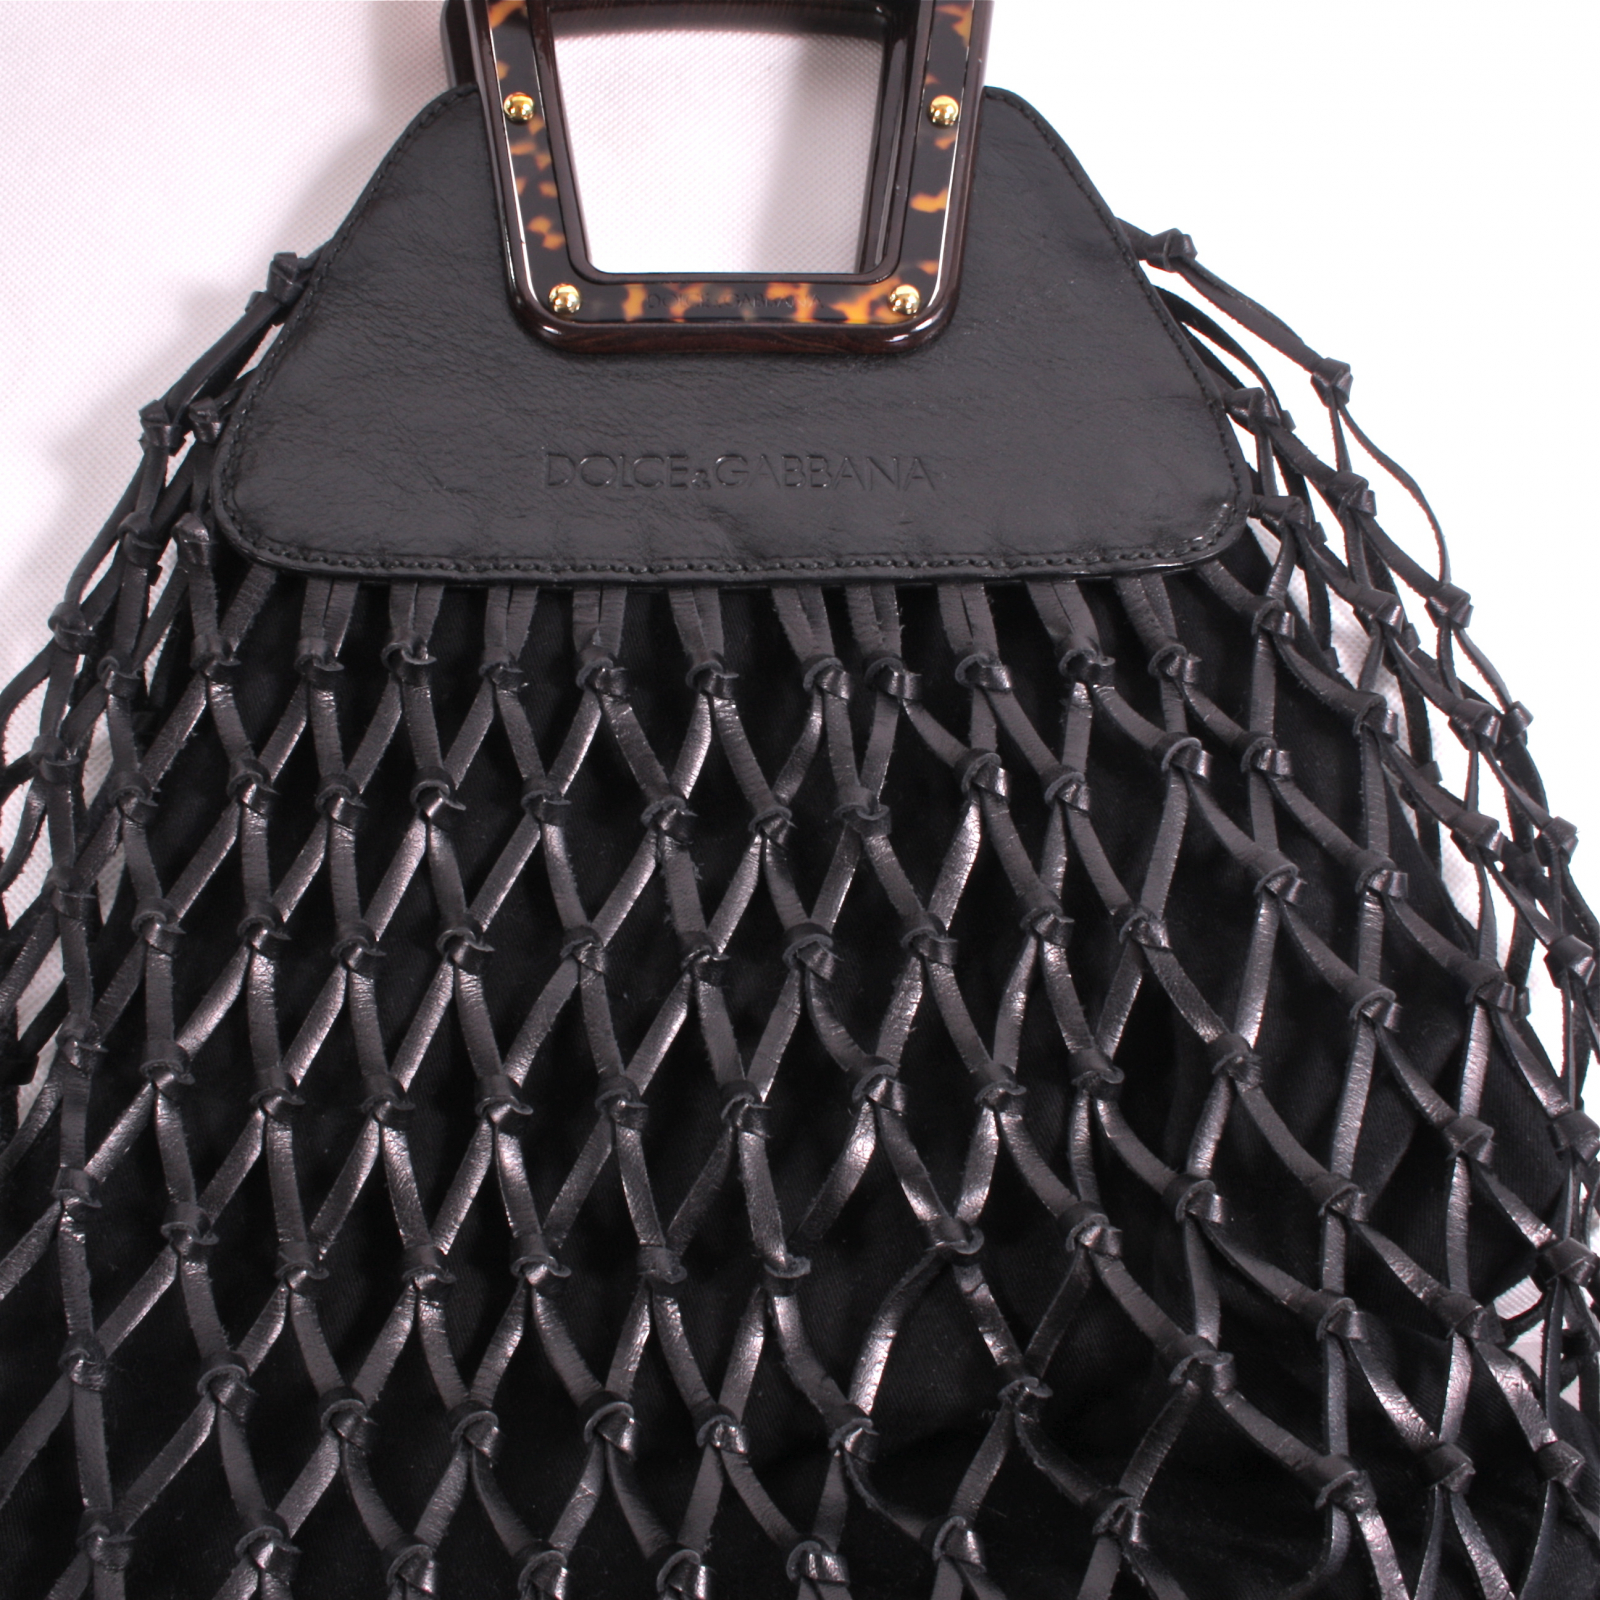 Dolce&Gabbana torba czarna